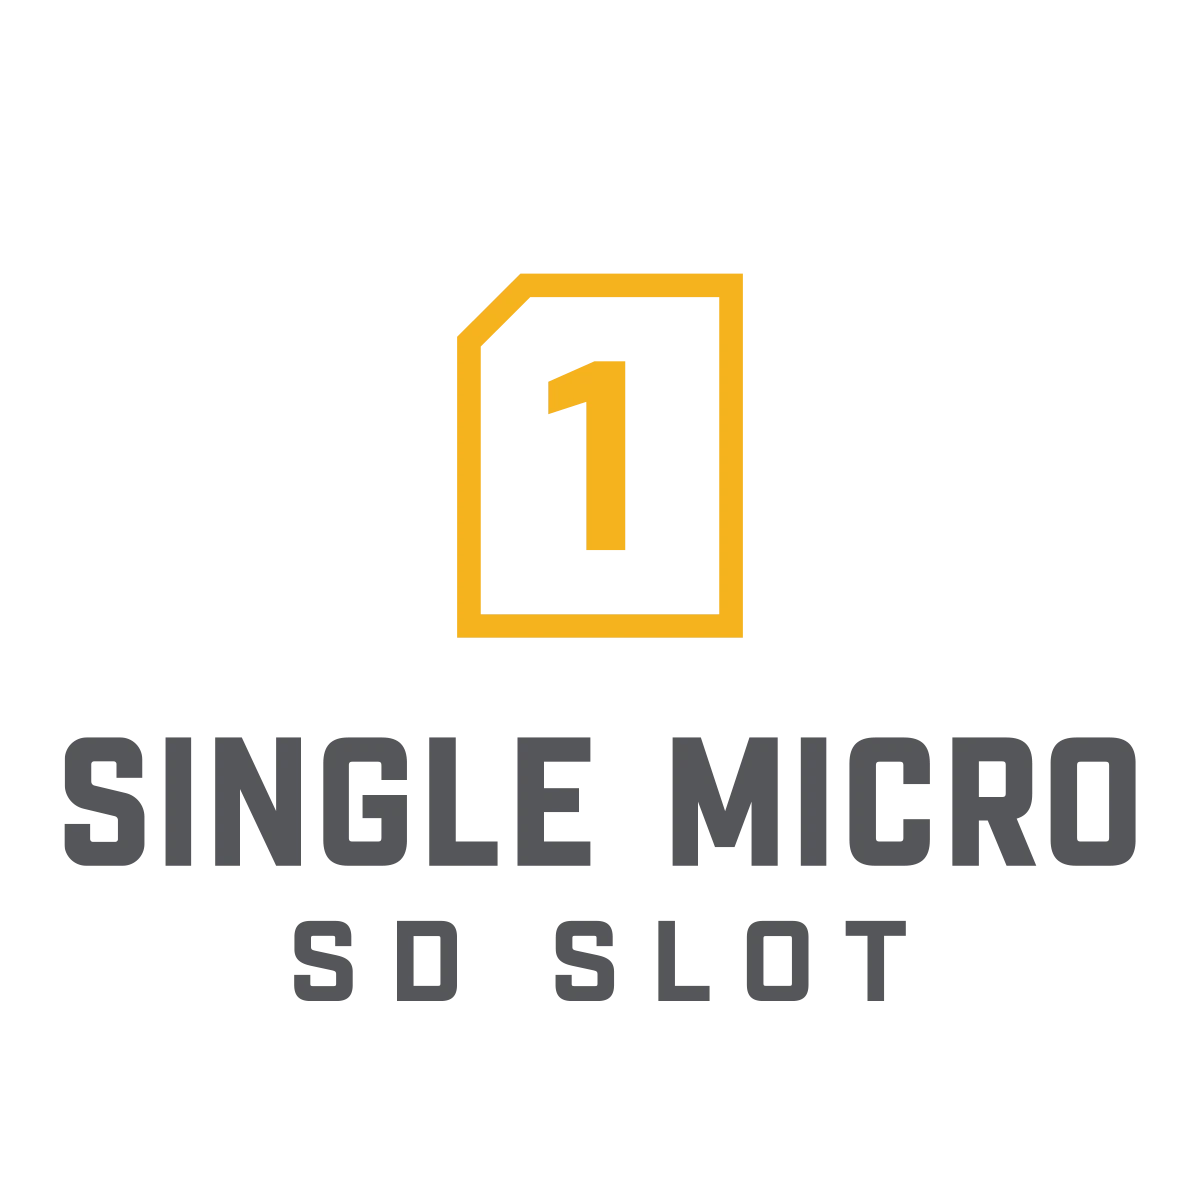 Single Micro-SD Slot